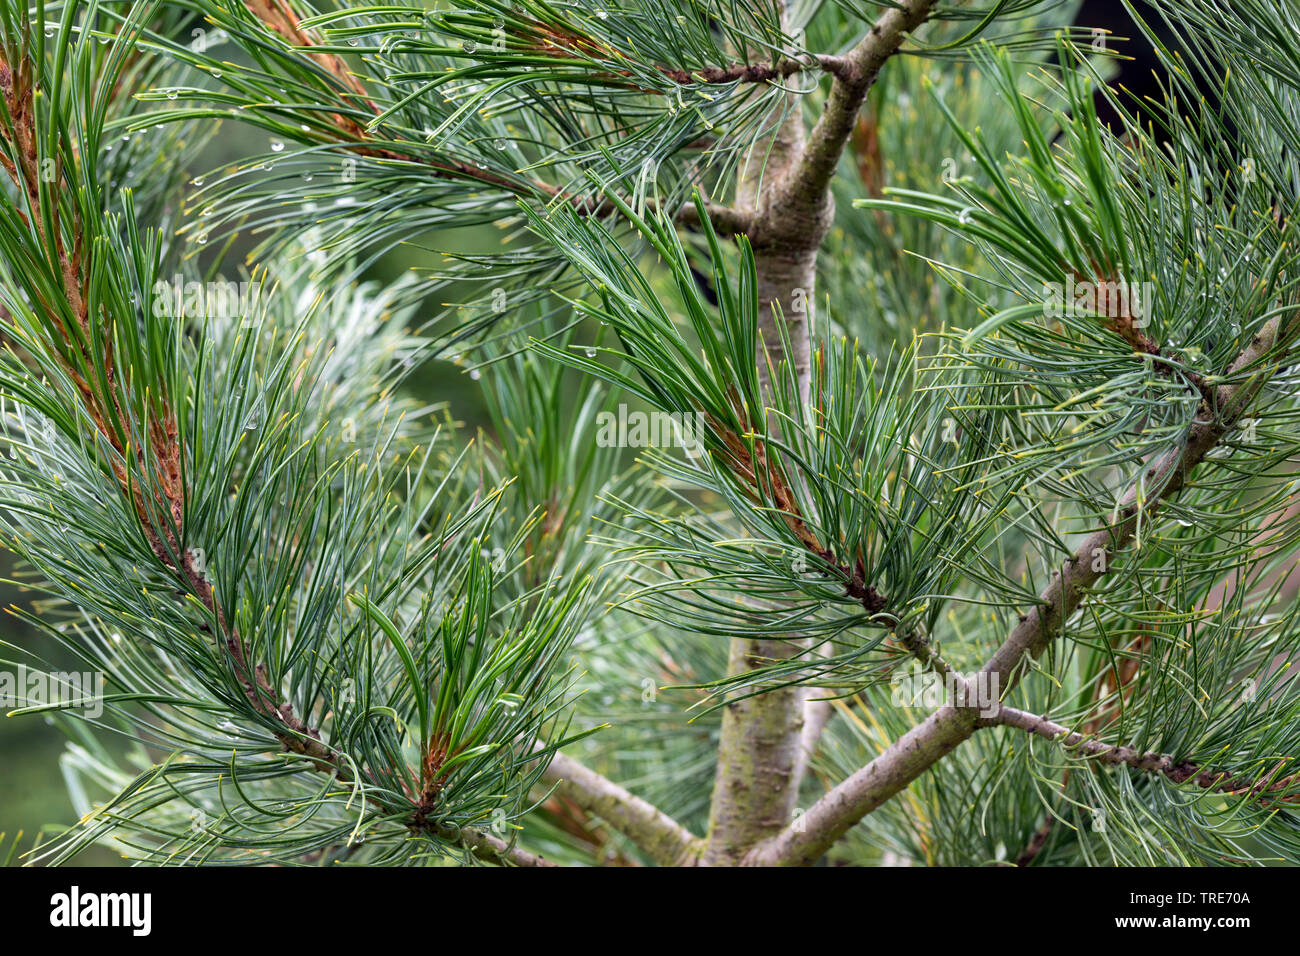 Swiss stone pine, arolla pine (Pinus cembra), branches, Germany Stock Photo